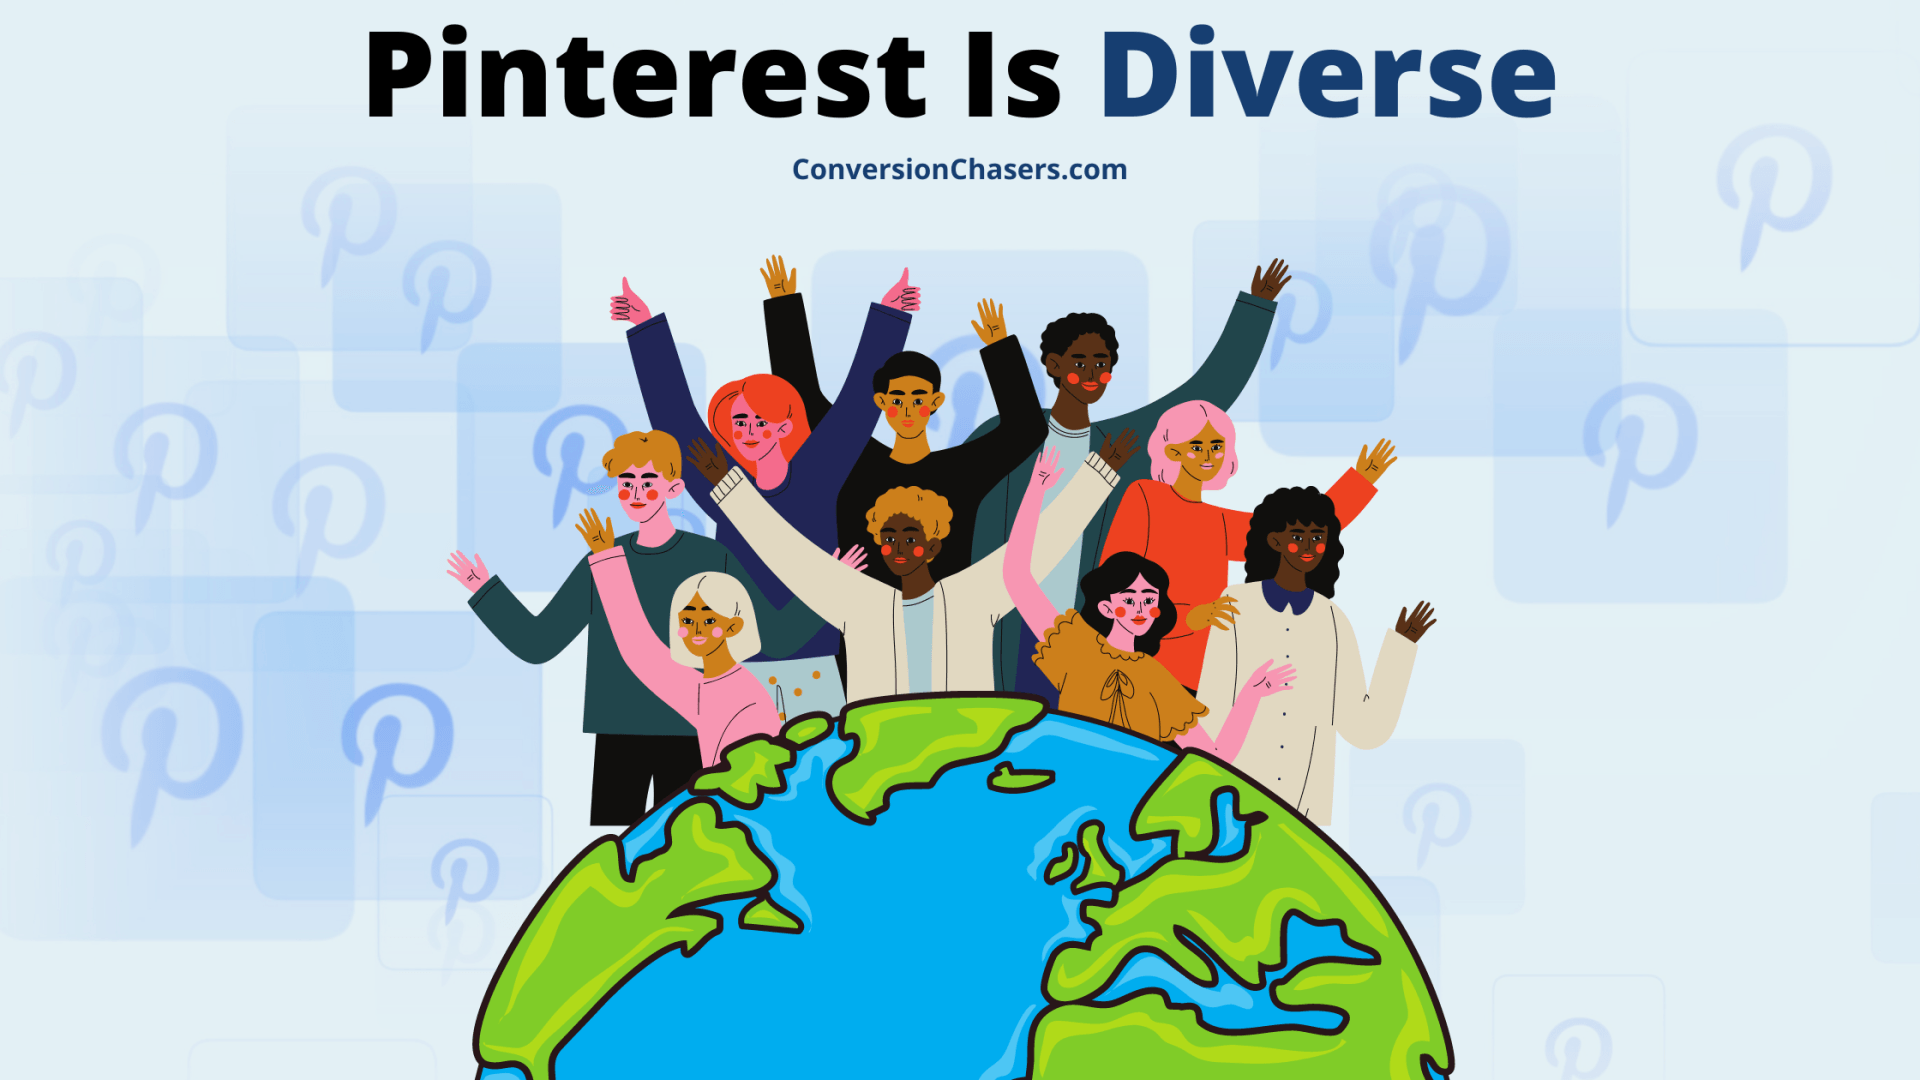 Pinterest is a diverse search engine platform